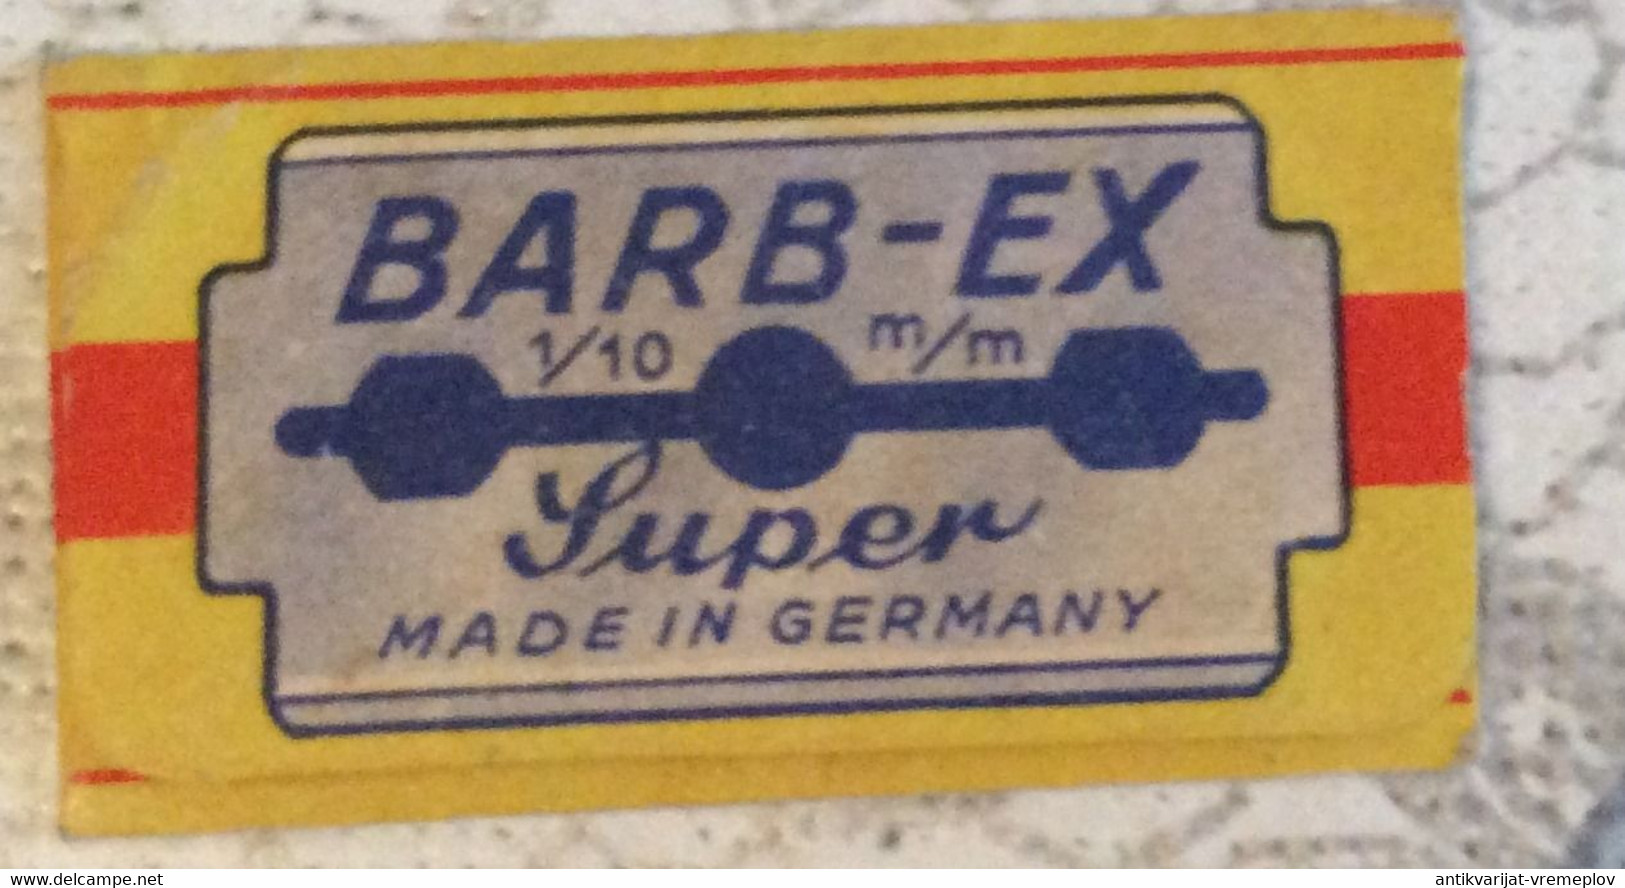 VINTAGE RAZOR BLADES ZILETI VEICOLI FAHRZEUGE BARB - EX SUPER MADE IN GERMANY - Razor Blades